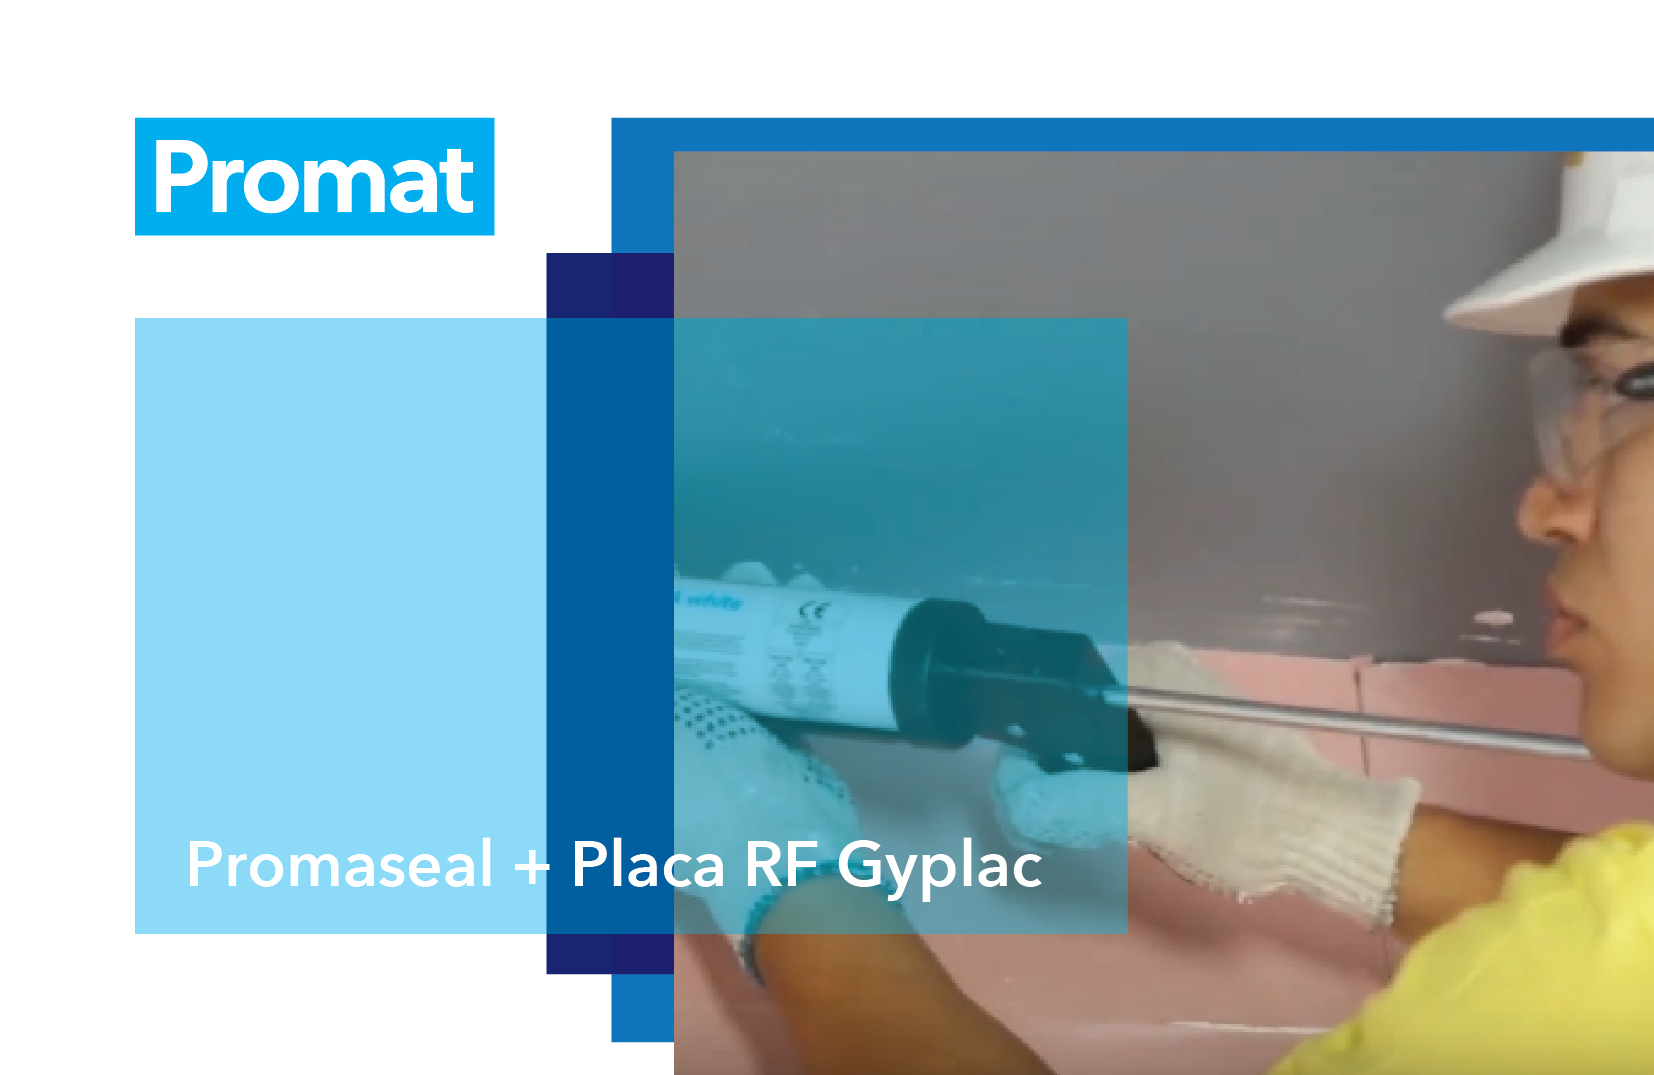 Promaseal + Placa RF Gyplac